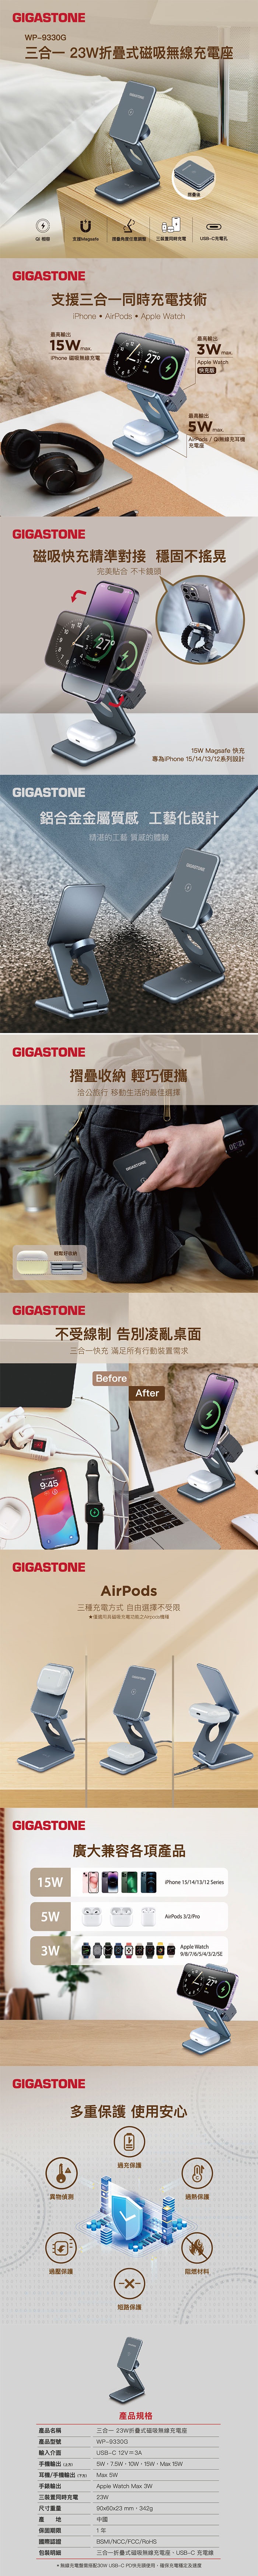 【Gigastone】三合一23W折疊磁吸式無線充電座 WP-9330G